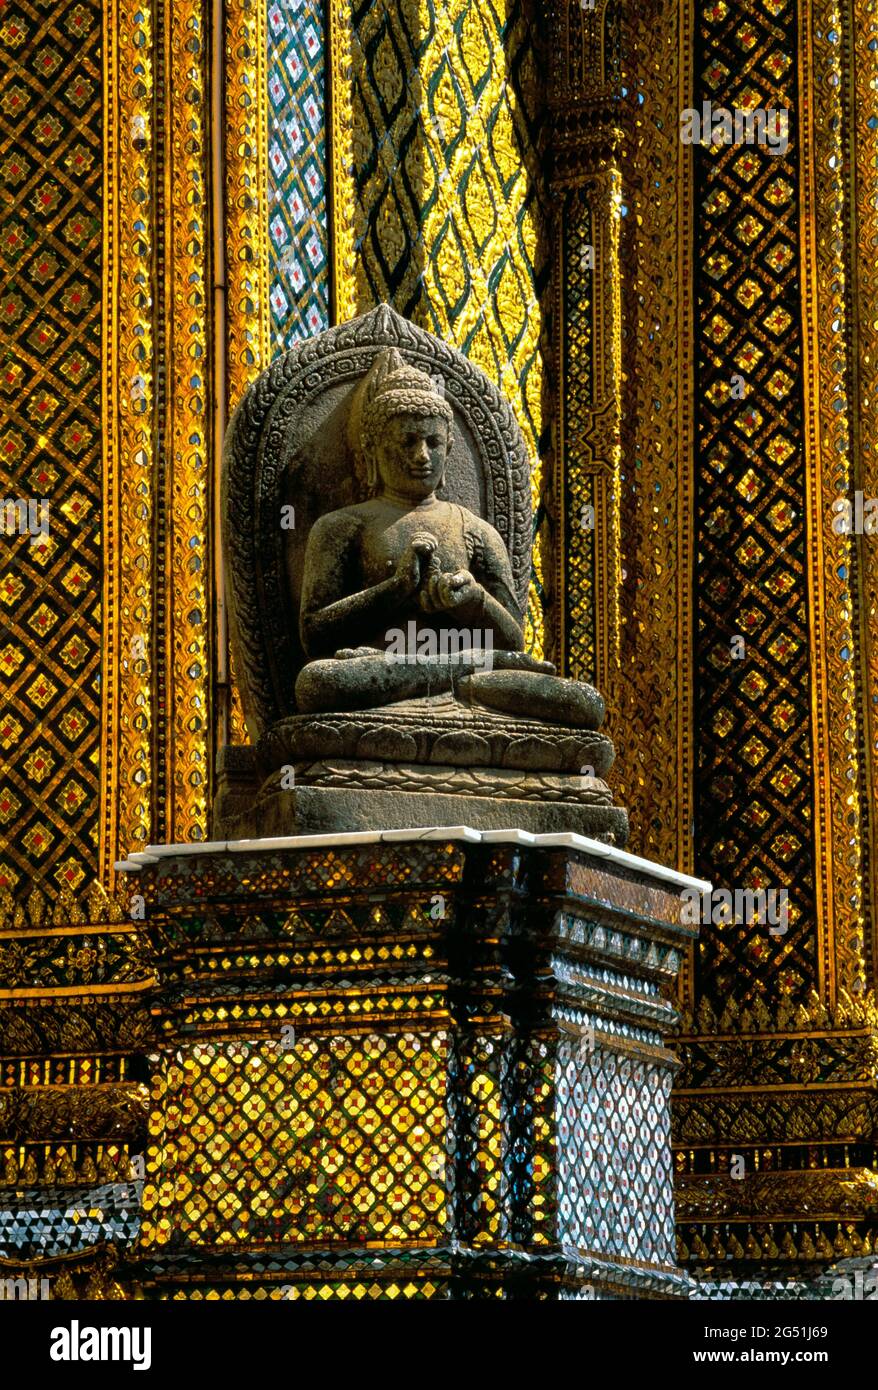 Buddha statue and golden architecture, Grand Palace, Bangkok, Thailand Stock Photo